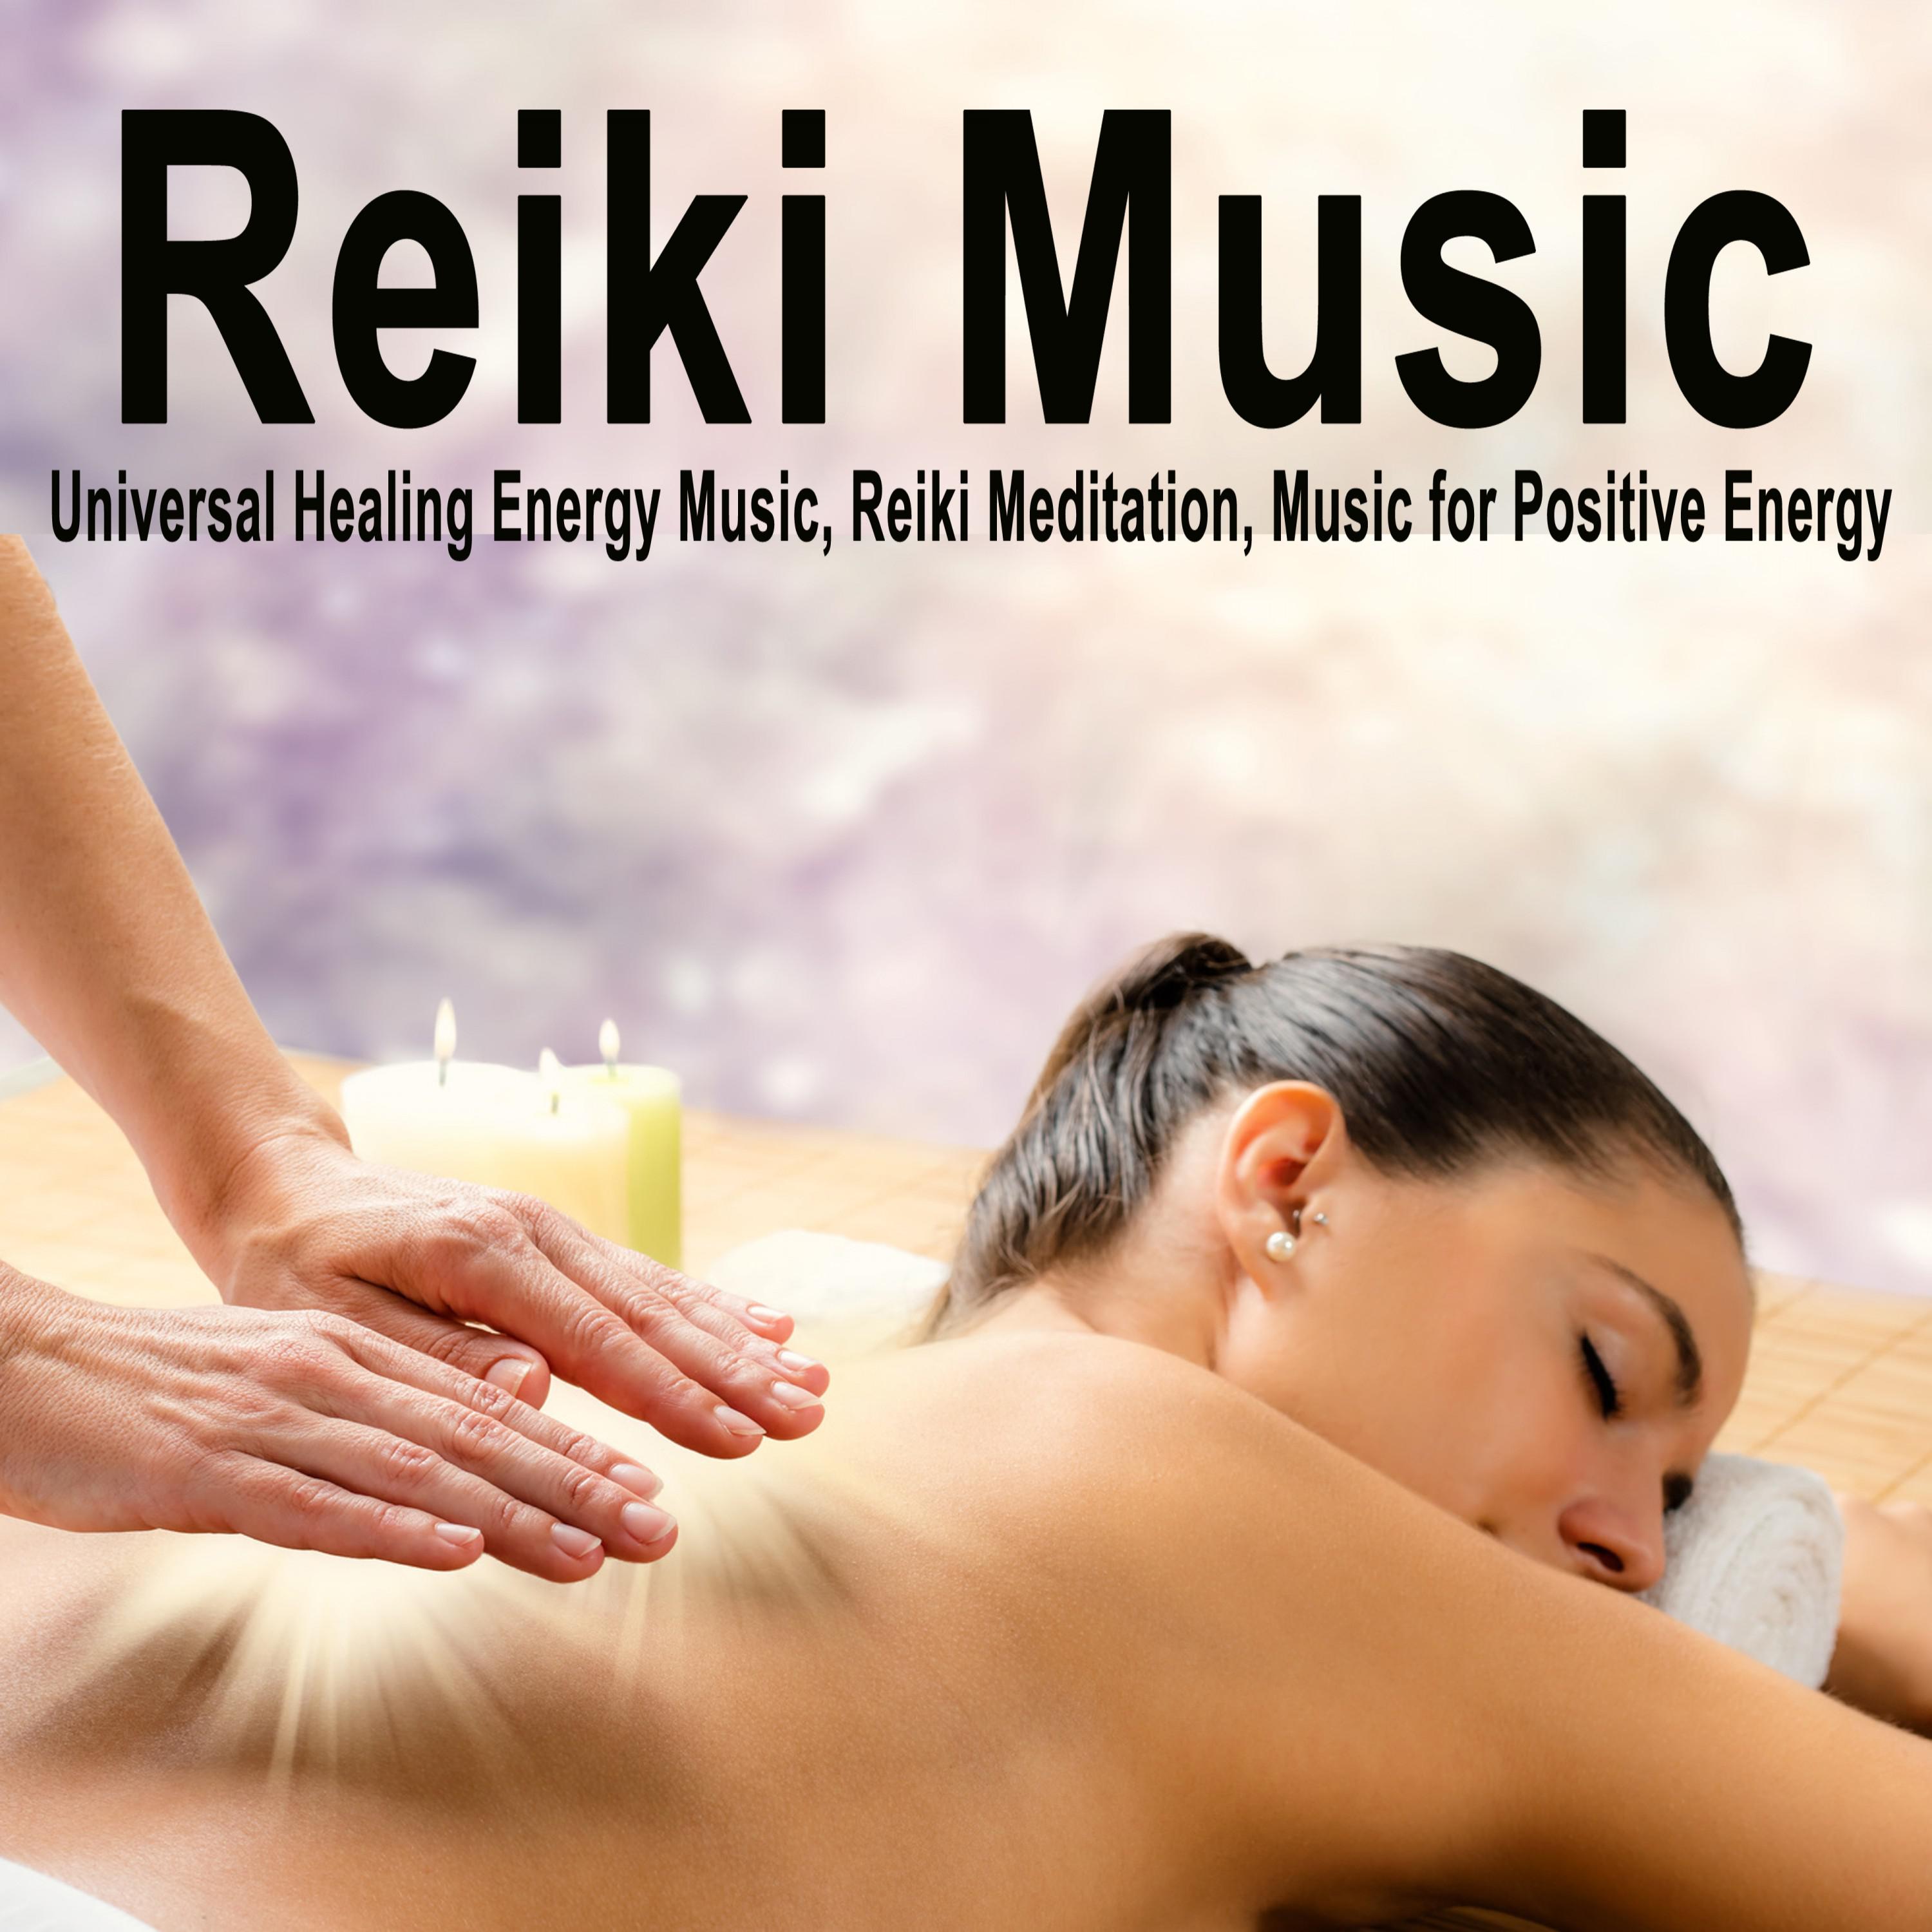 Reiki Music (Universal Healing Energy Music, Reiki Meditation, Music for Positive Energy)